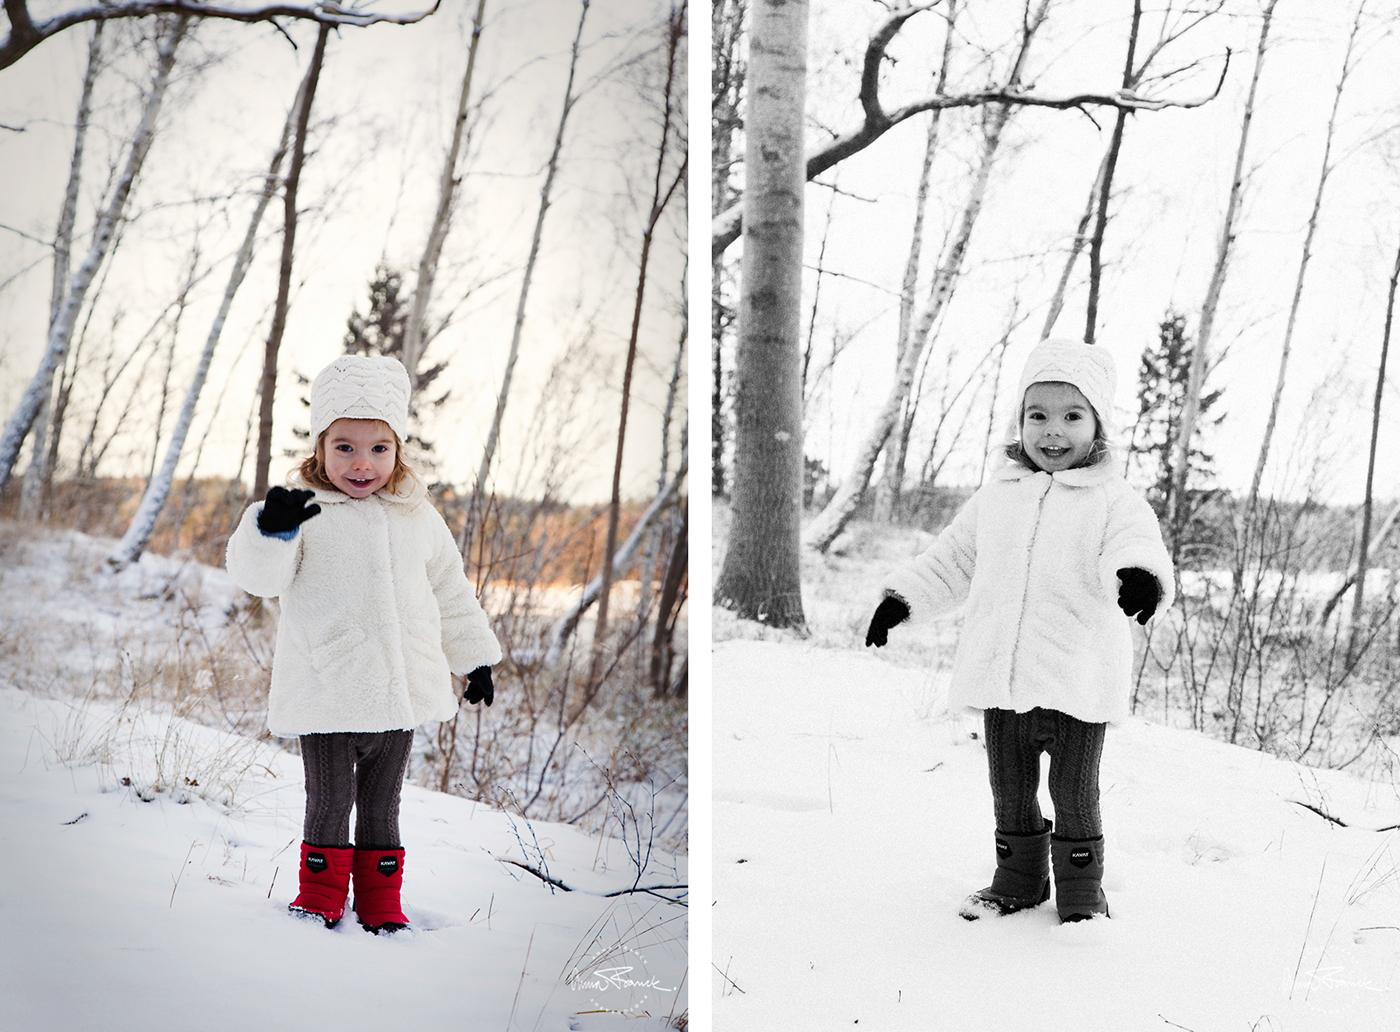 barnfotografering, lapsikuvaus, kids, portrait, photography, valokuvaus, fotografering, porträtt, anna, franck, winter, vinter, talvi, söpö, söt, sweet, stockholm, sweden, sverige, snö, snow, lunta